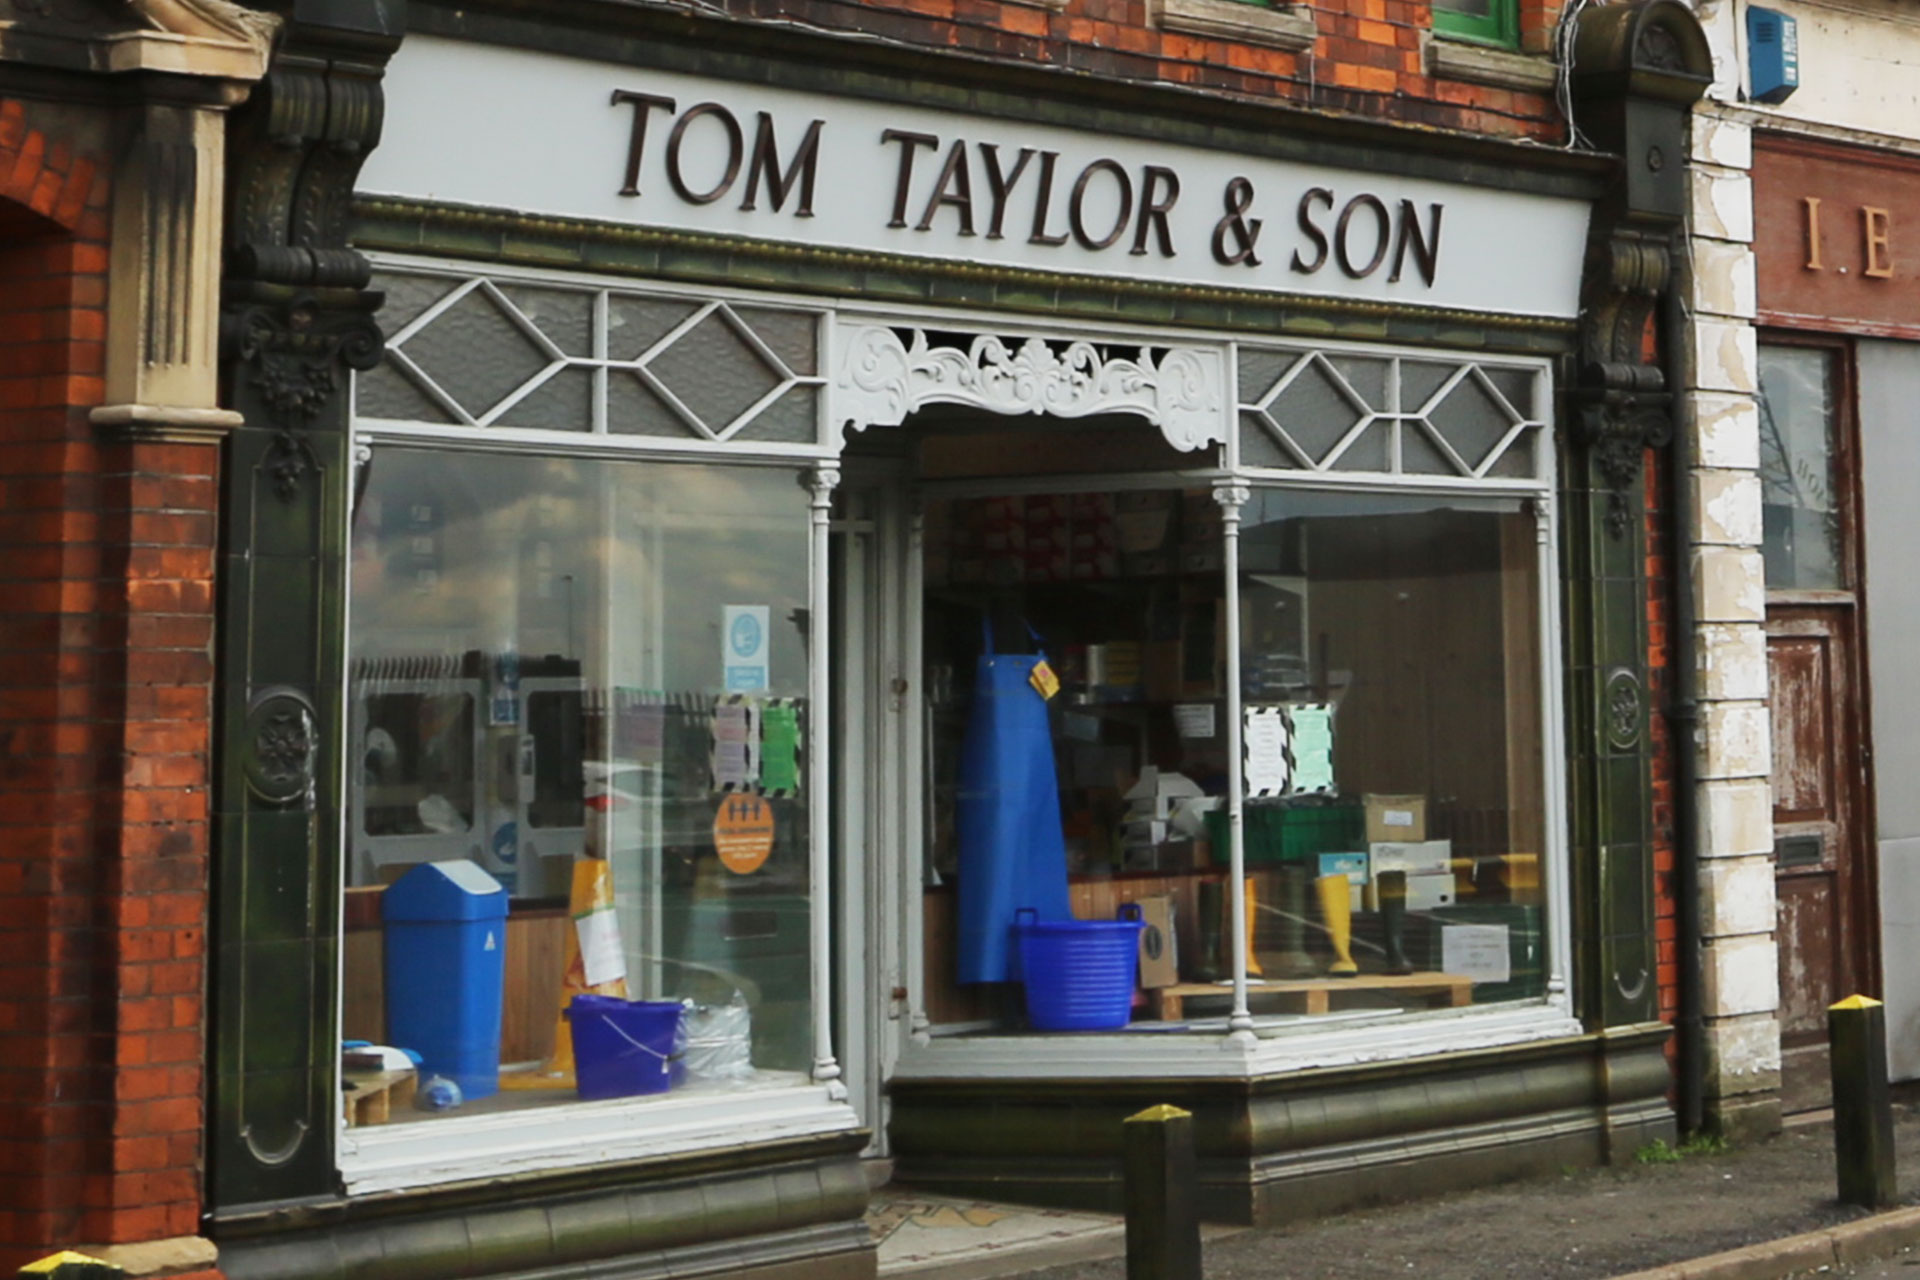 Tom Taylor $ Son exterior